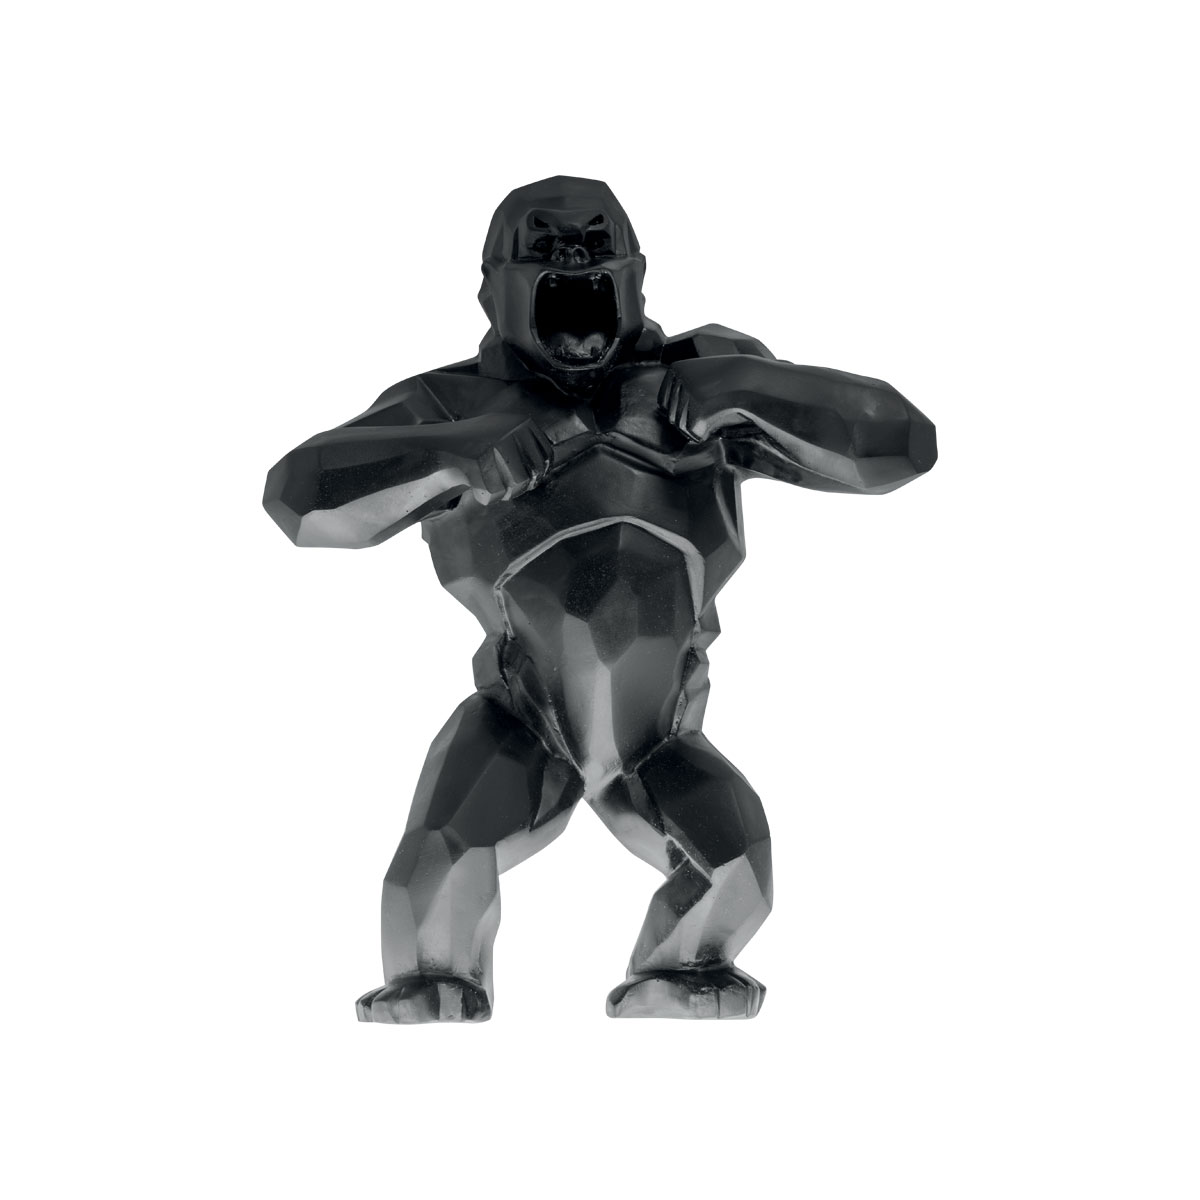 Daum Wild Kong in Black by Richard Orlinski, Limited Edition Sculpture